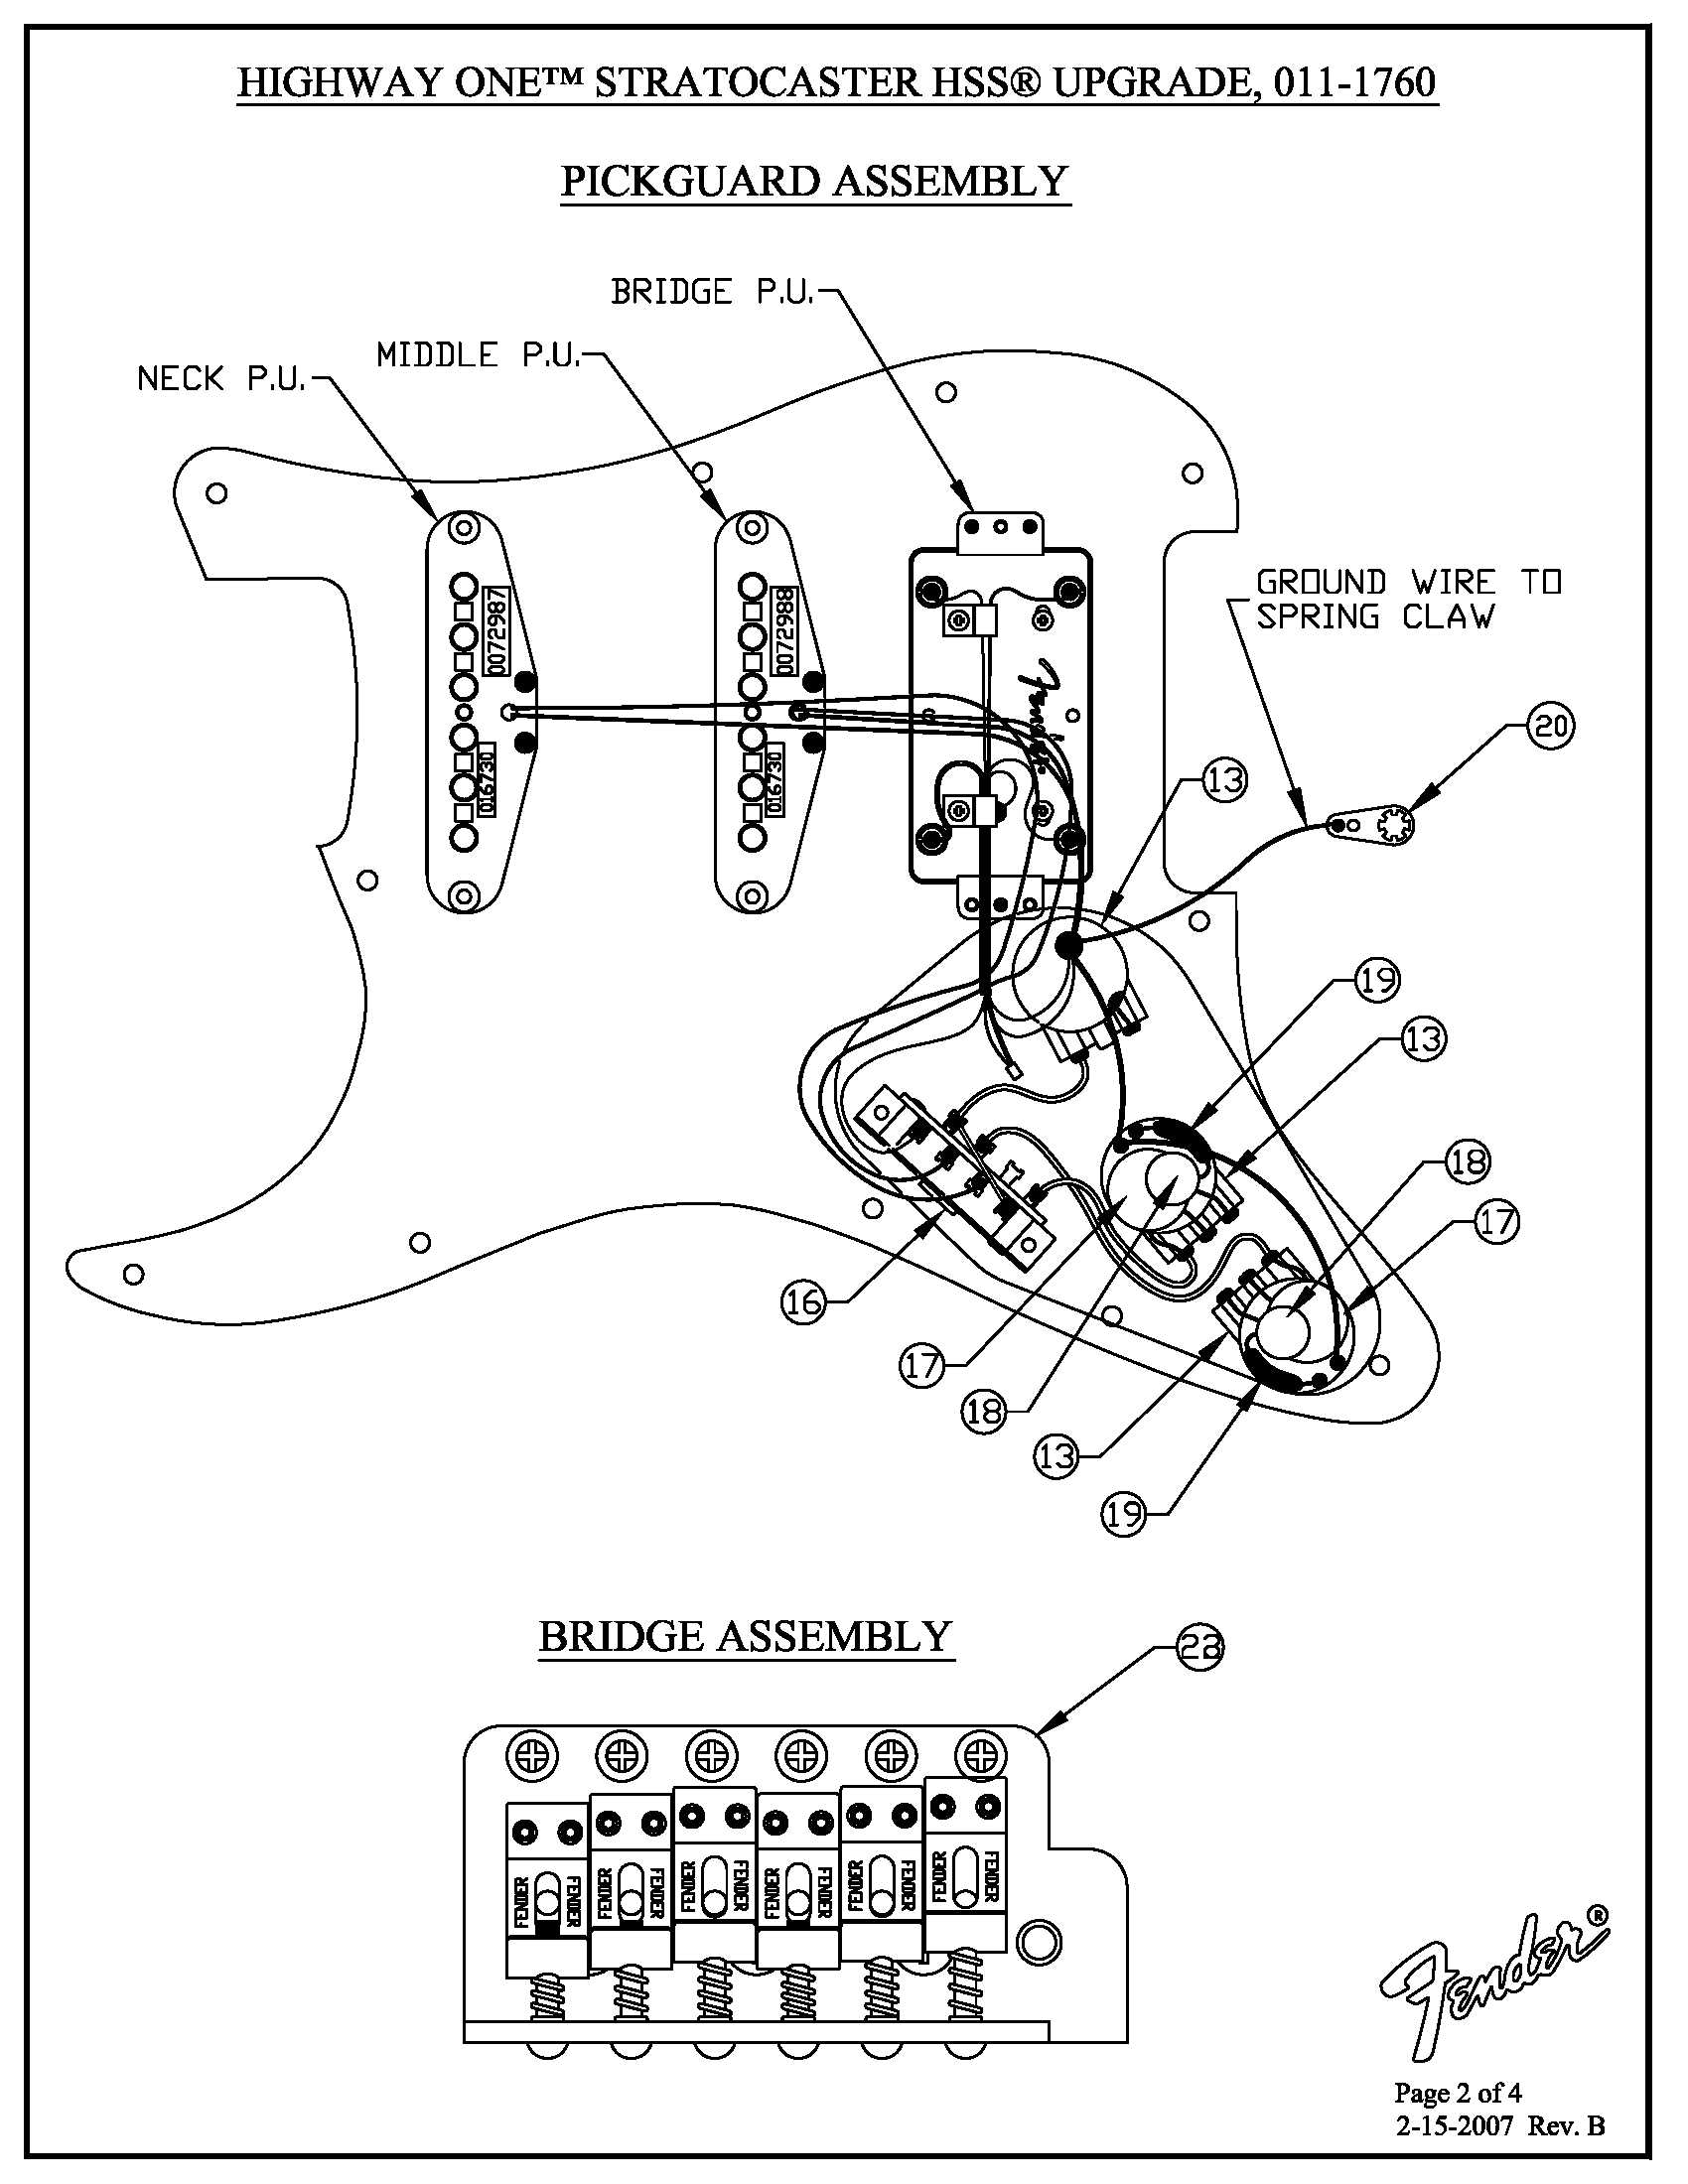 Highway 1 Stratocaster HSS Upgrade Wiring Diagram 0111760 · Customer